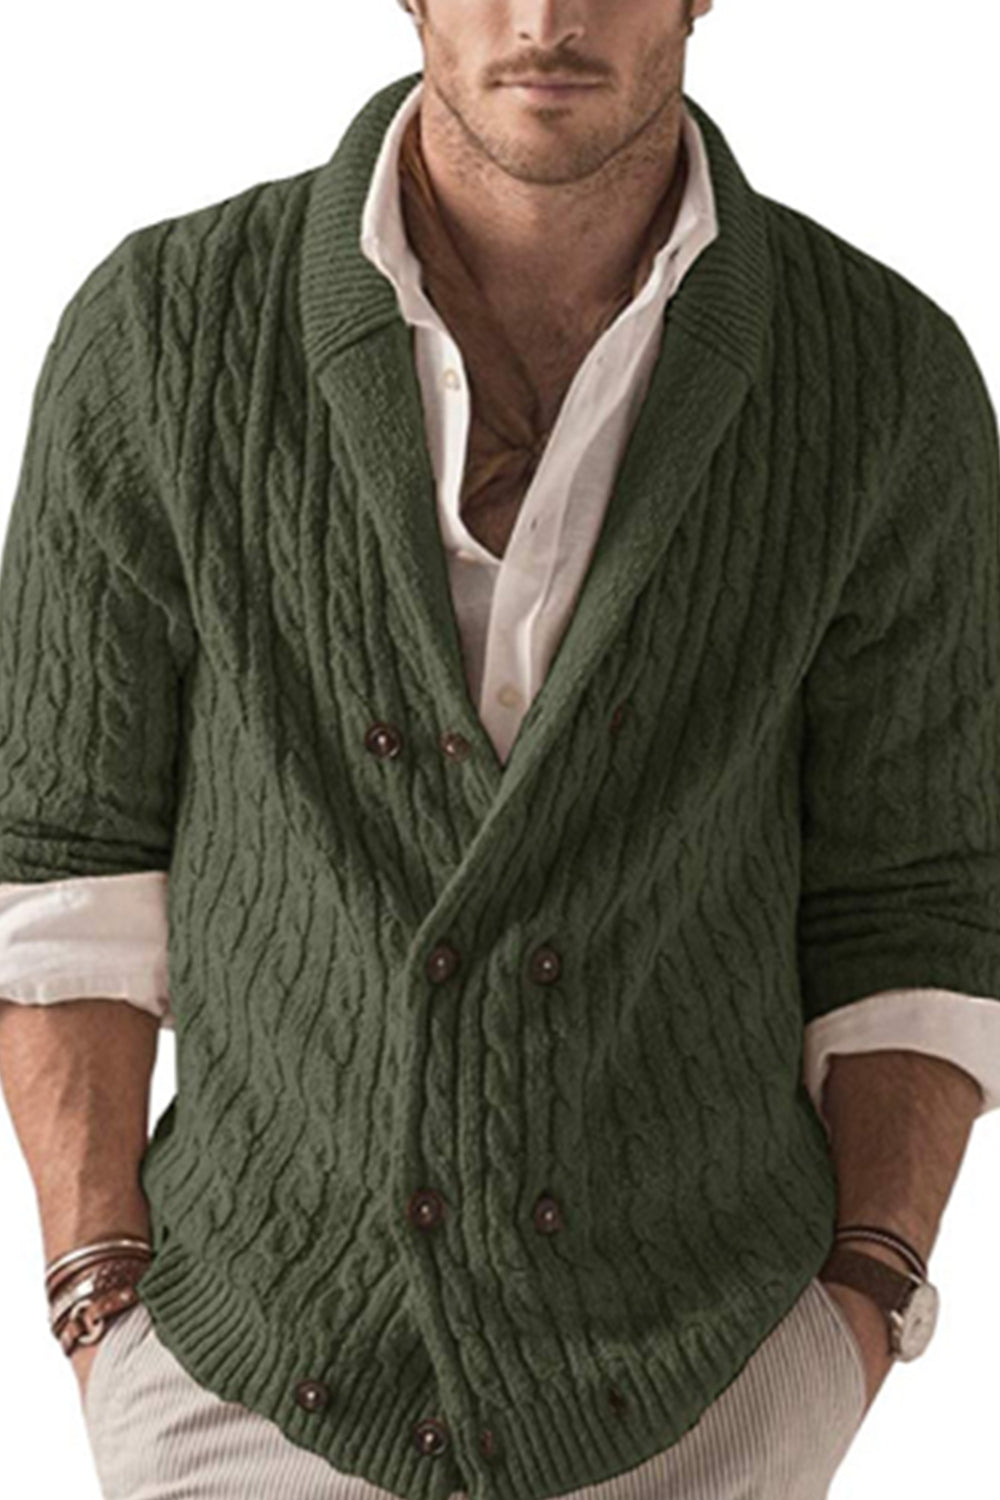 Iyasson Men's Knit V-neck Cardigan Sweater Coat